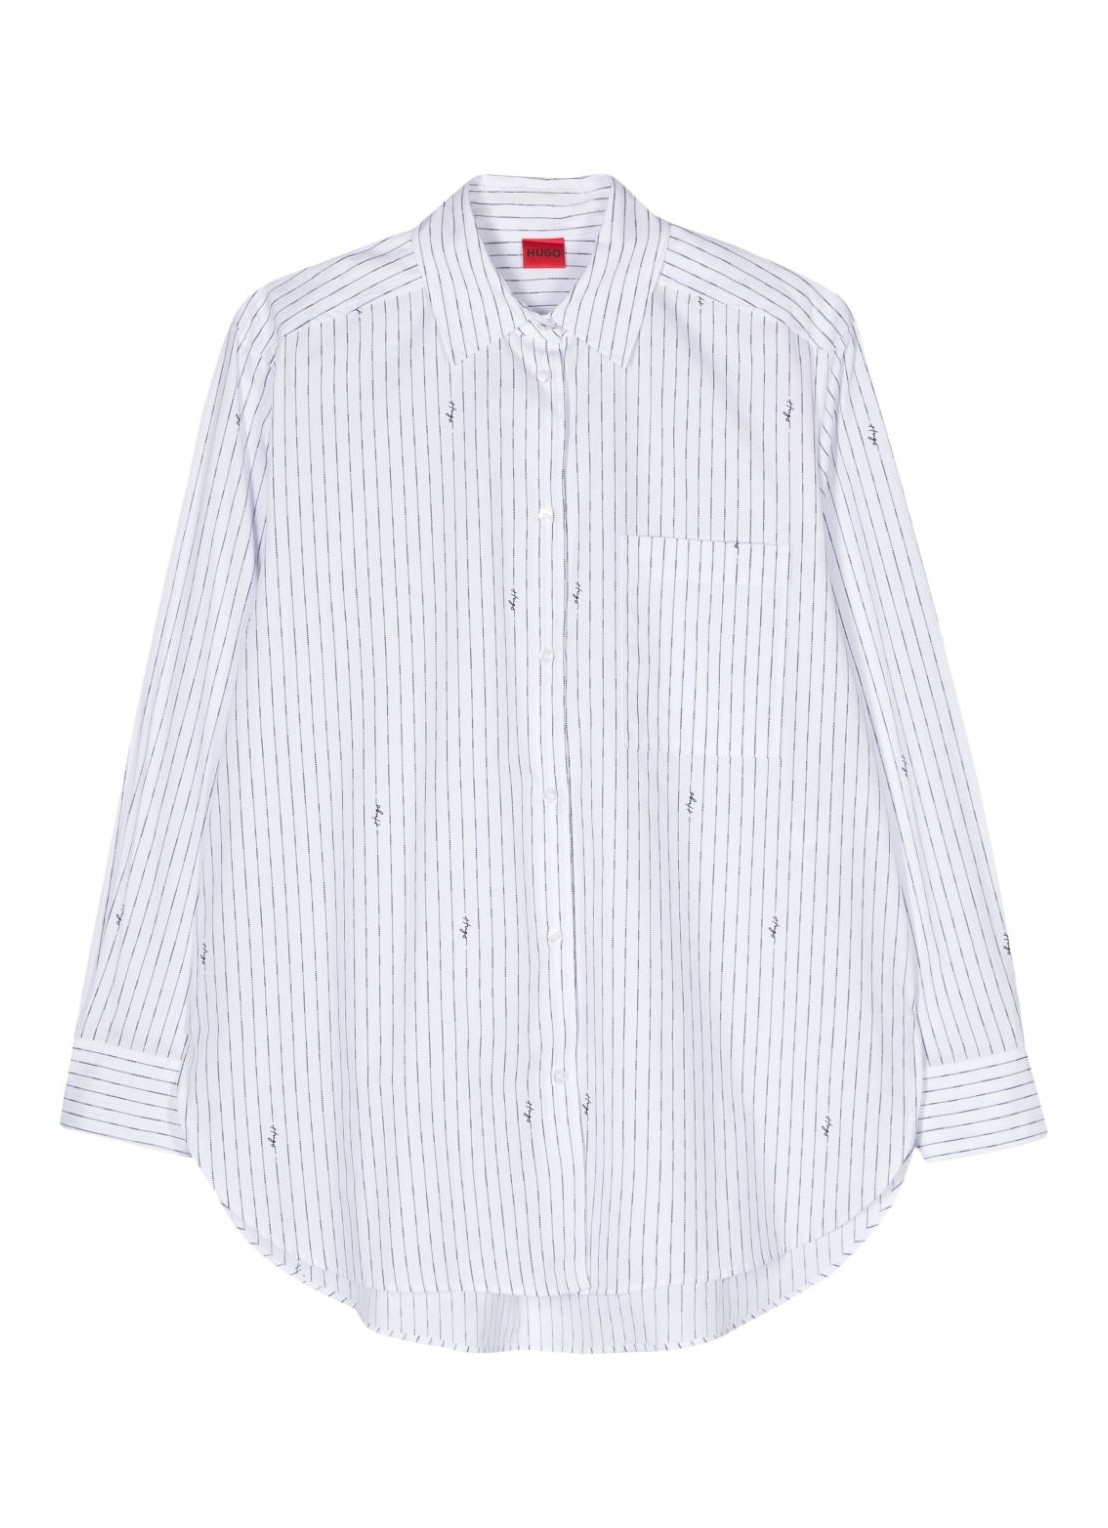 Camiseria hugo shirt womanelodina - 50509182 968 talla blanco
 